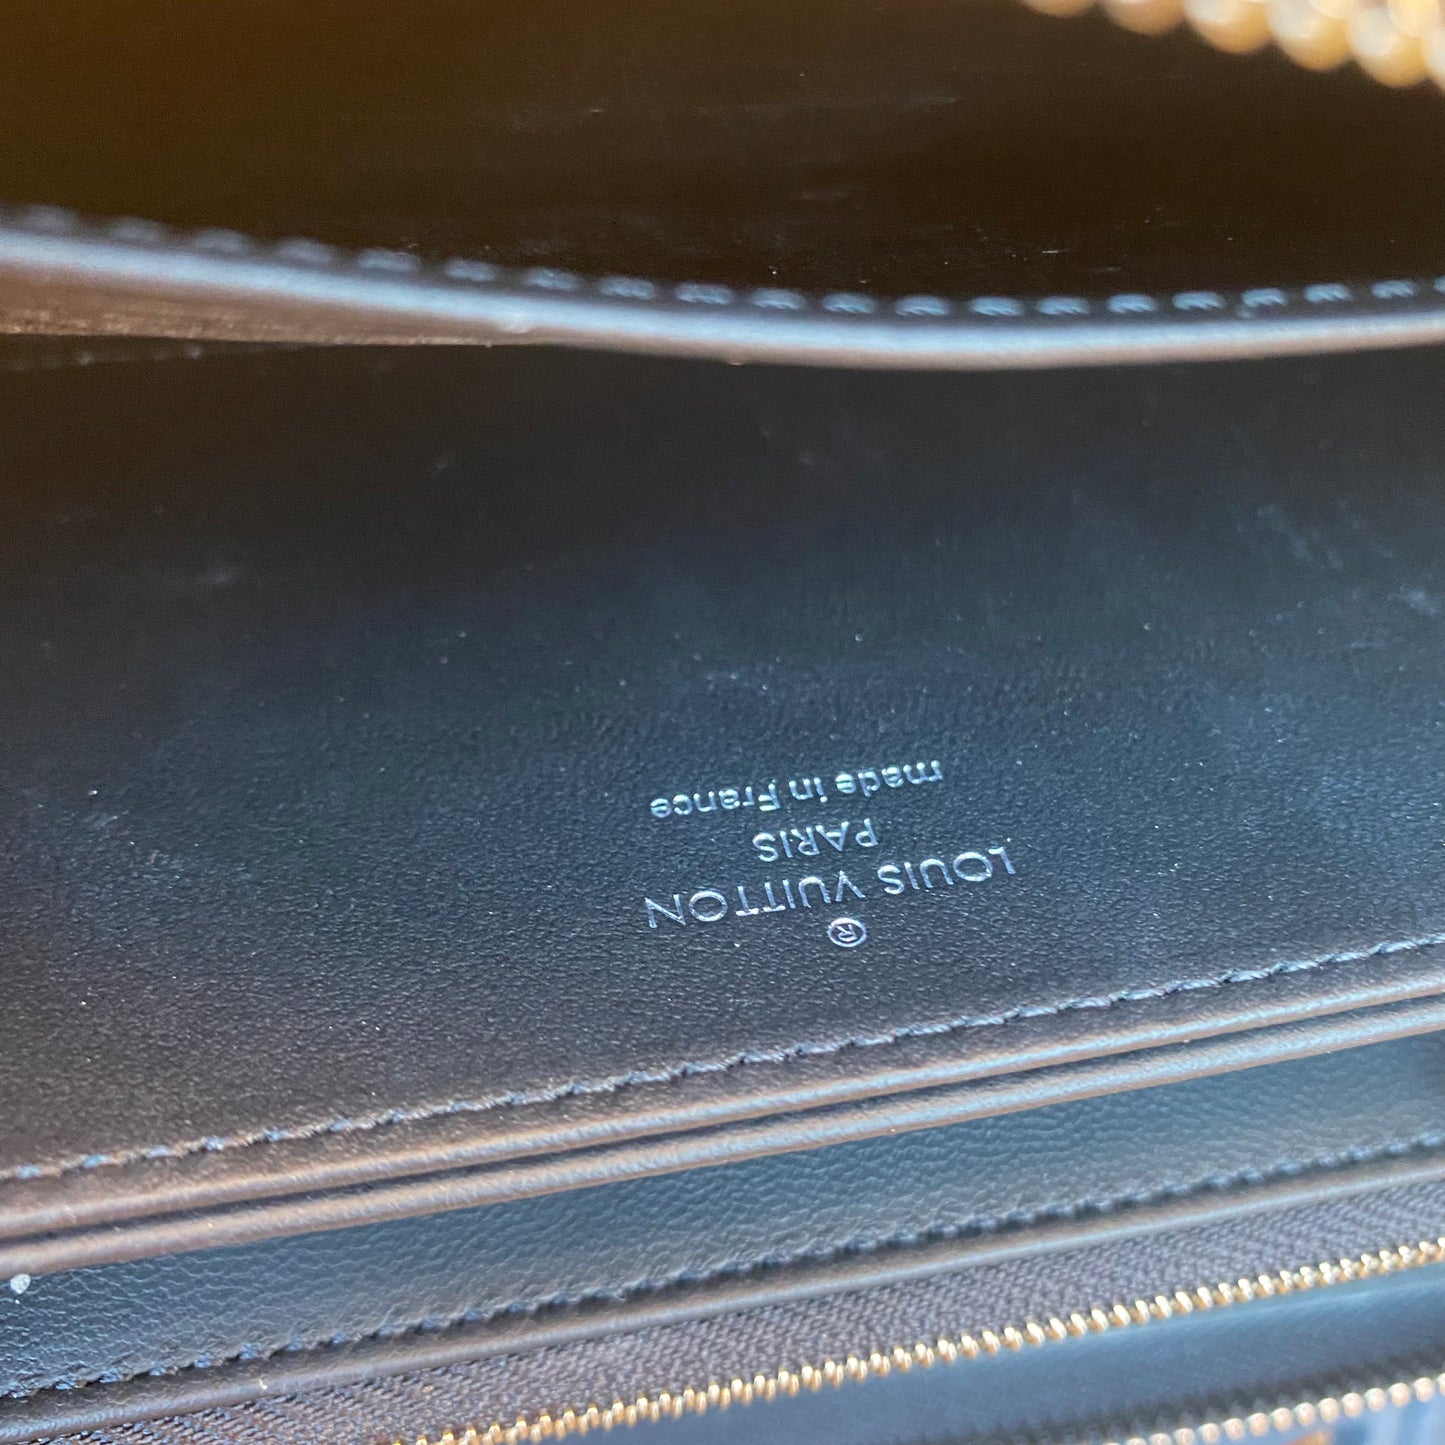 Louis Vuitton Mahina Zippy Wallet